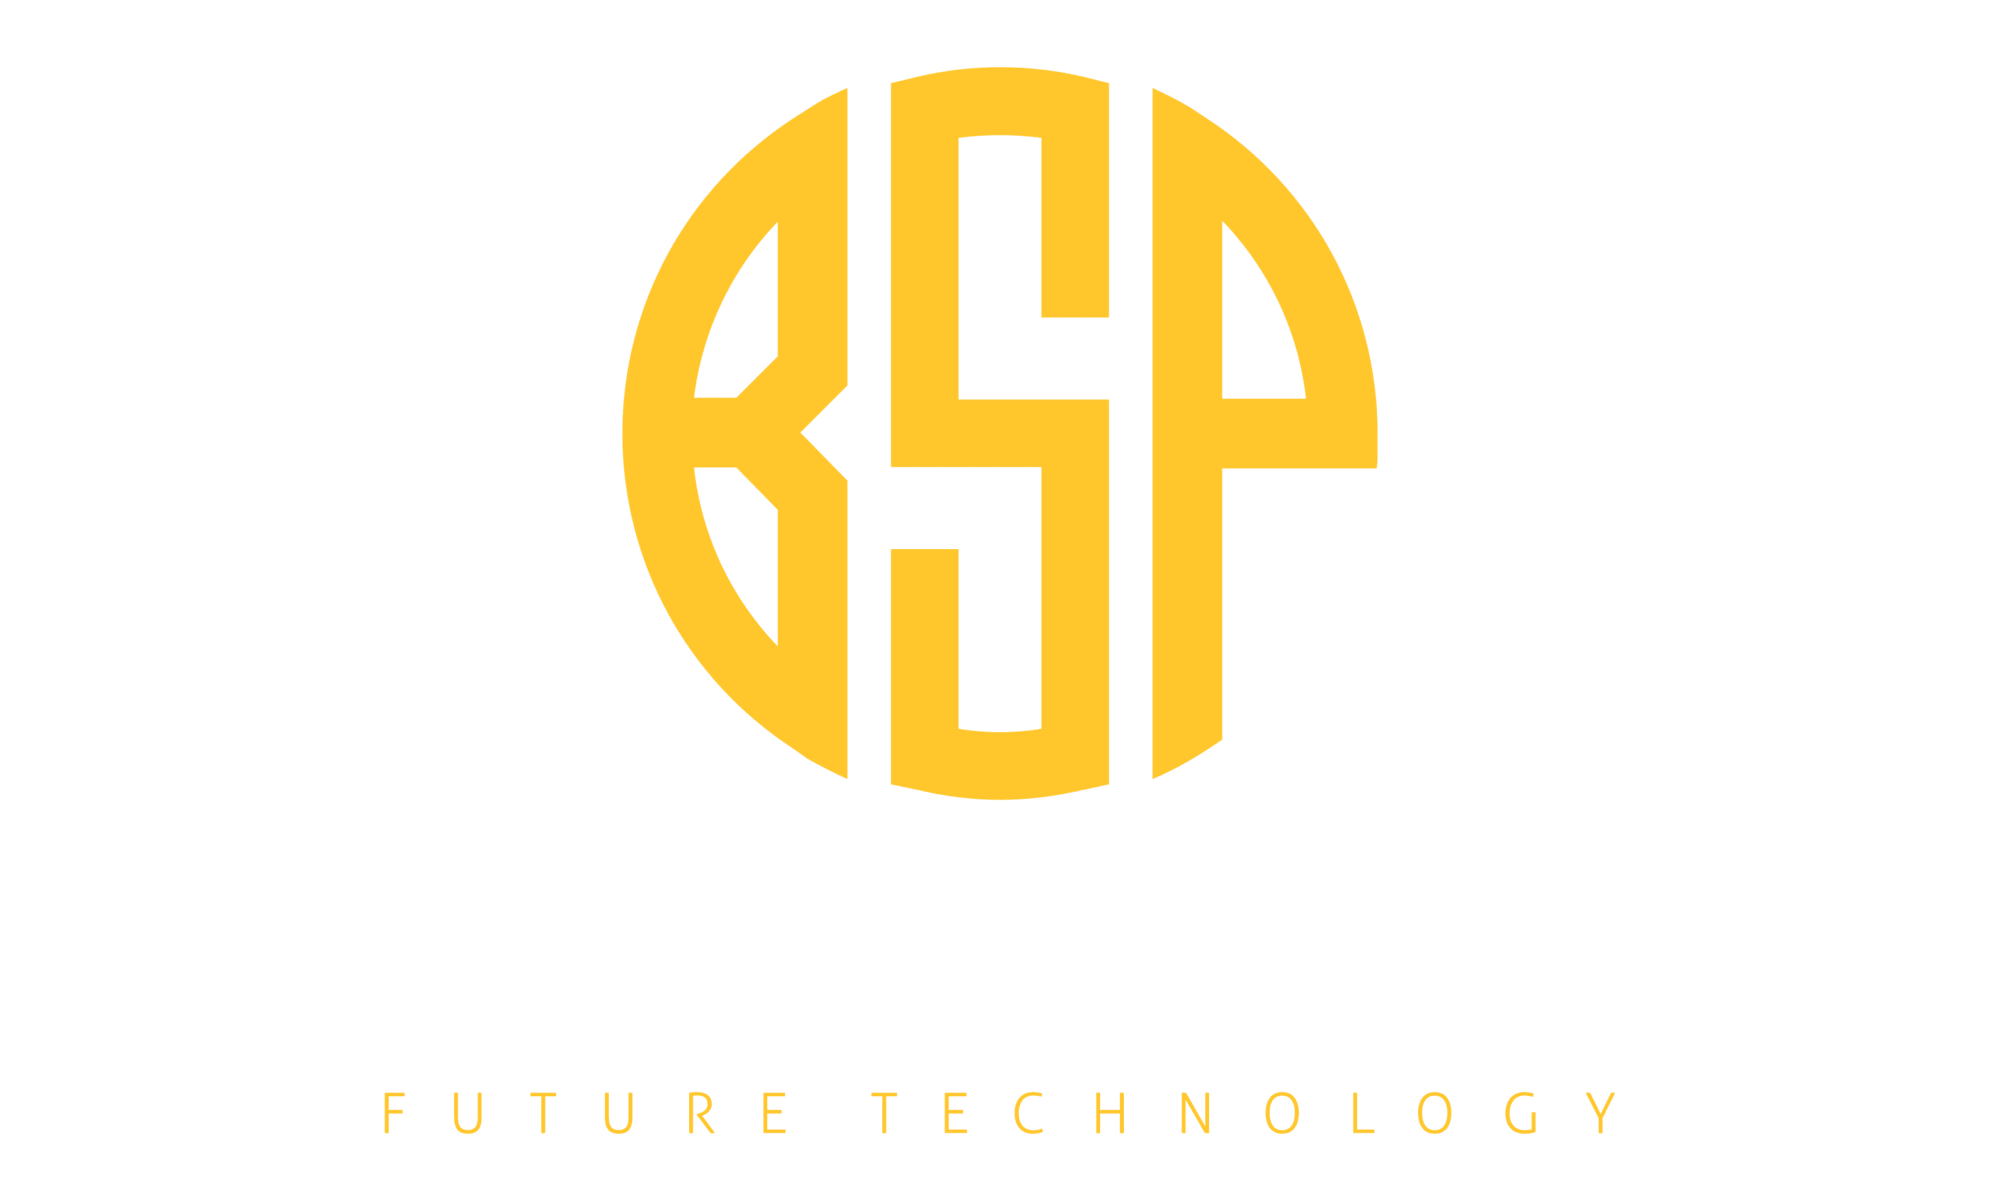 BELO SOLAR POWER